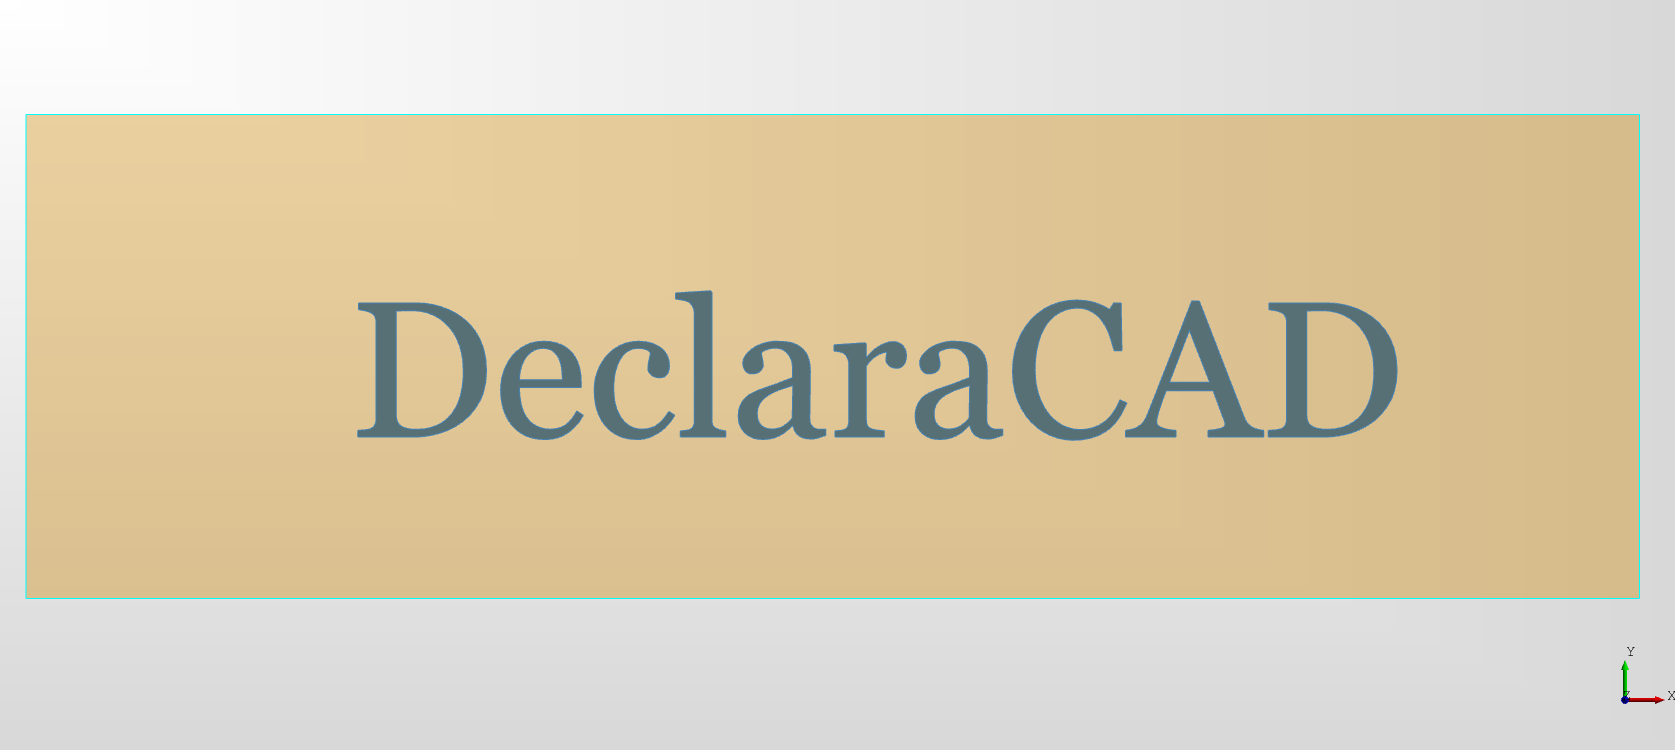 DeclaraCAD text